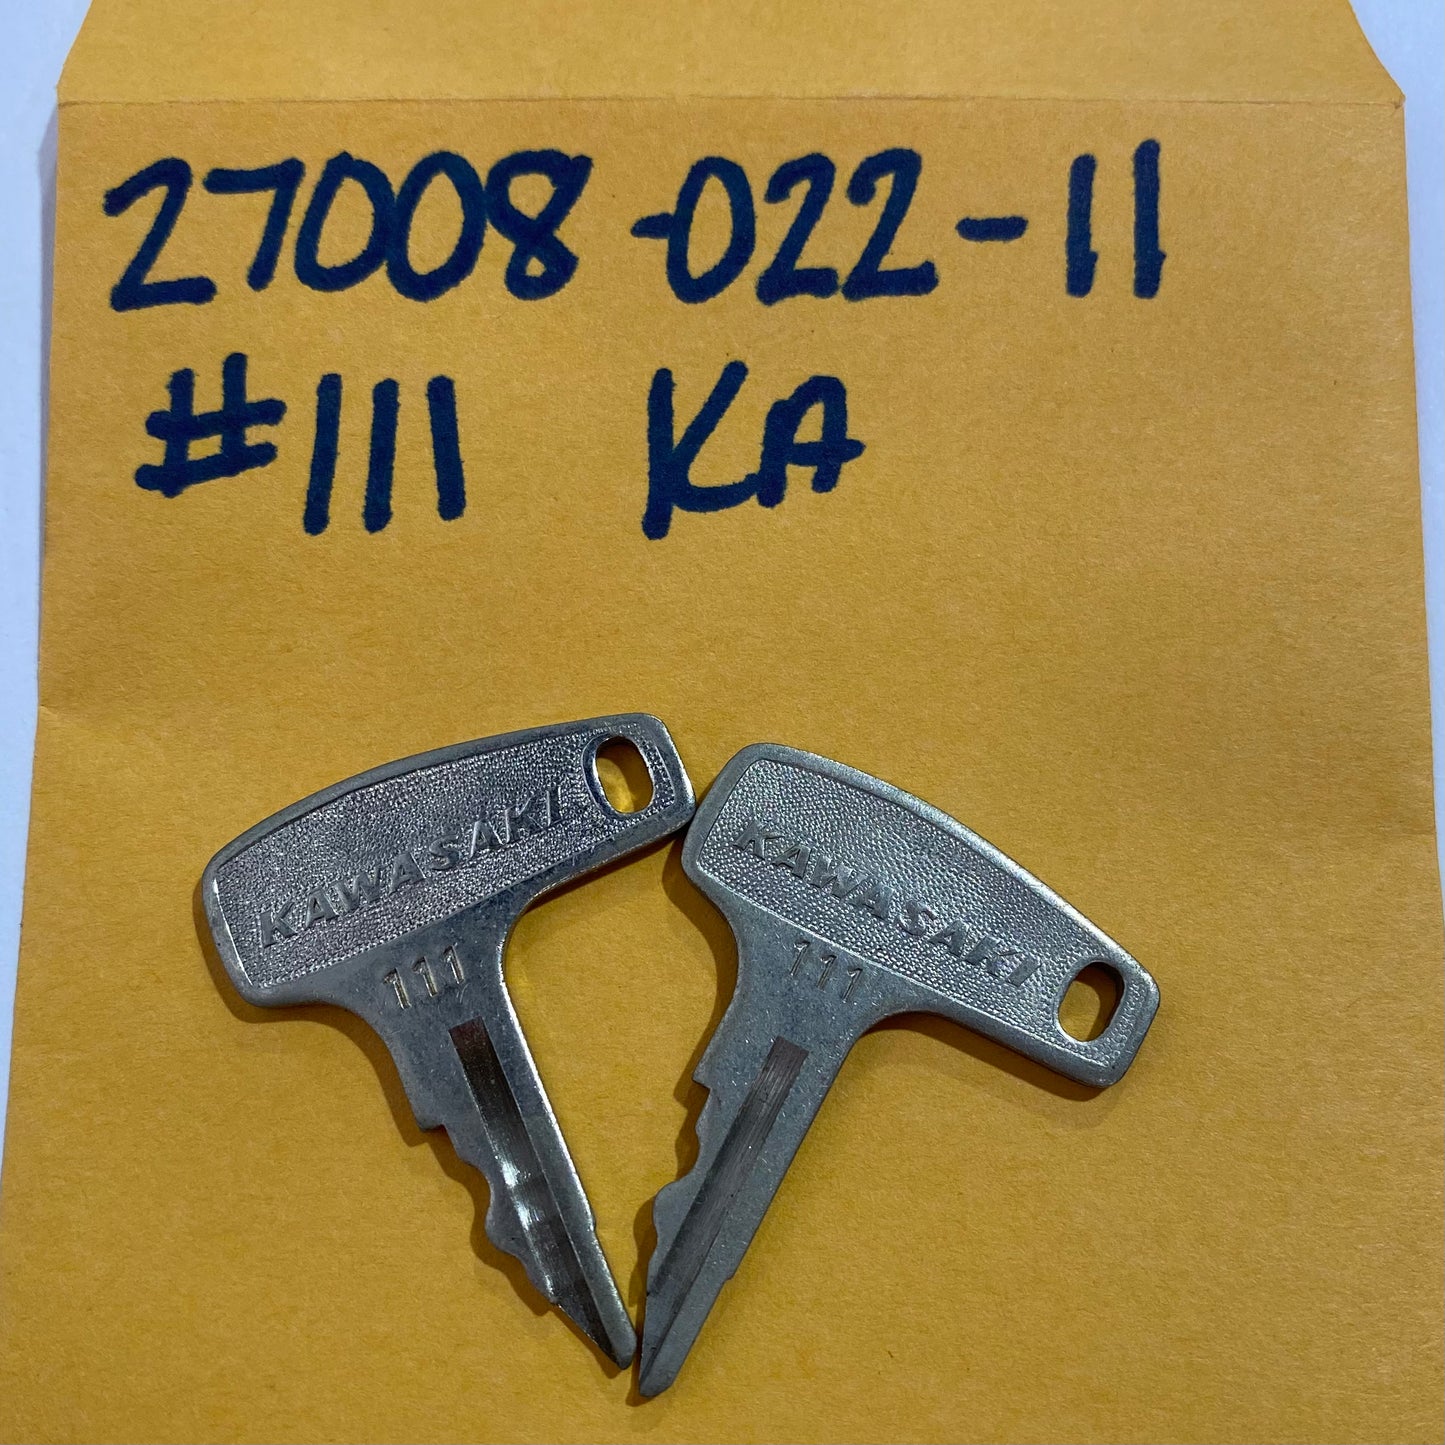 Kawasaki Key Set #111 27008-022-11